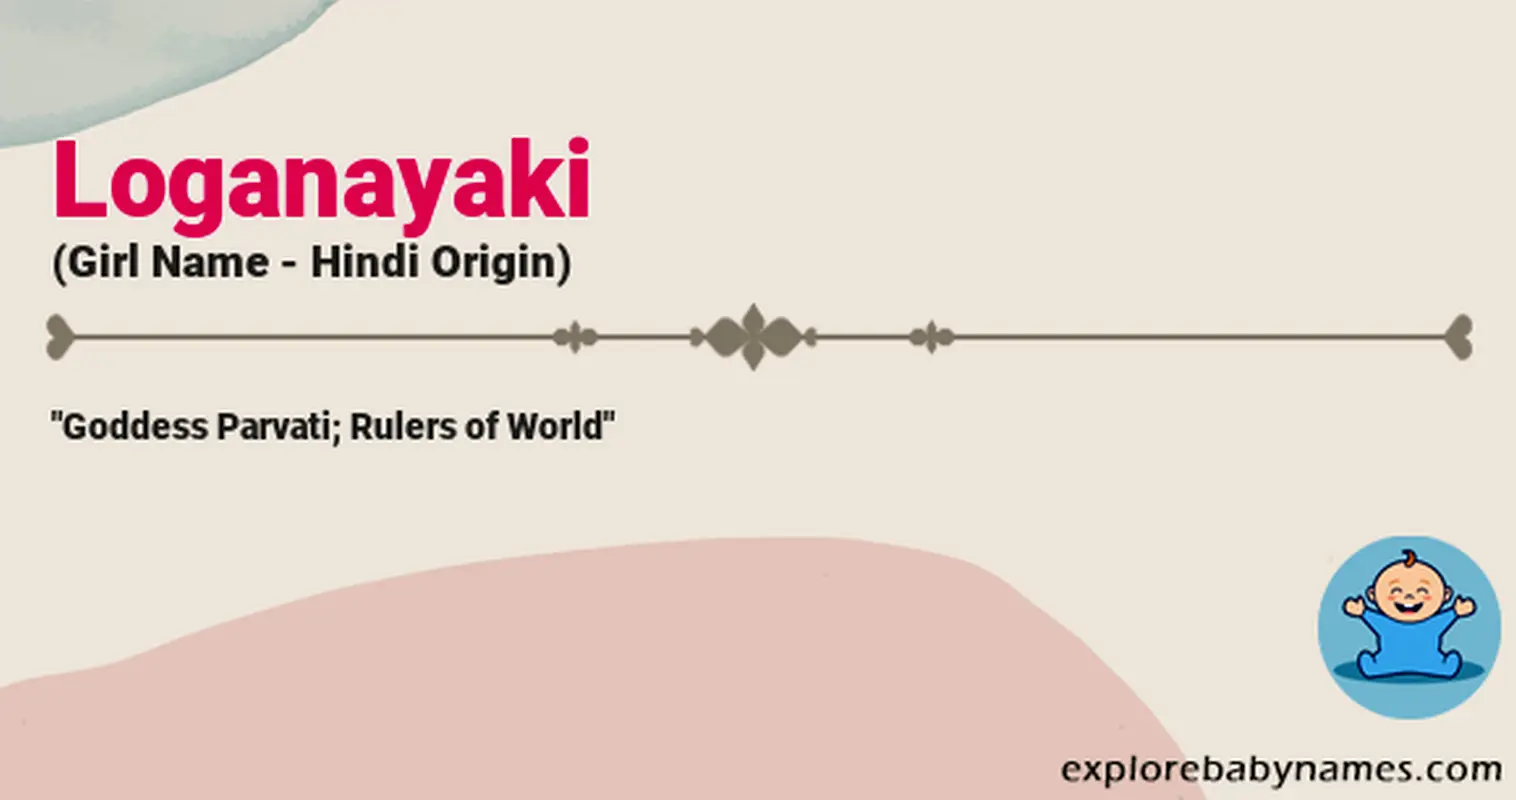 Meaning of Loganayaki